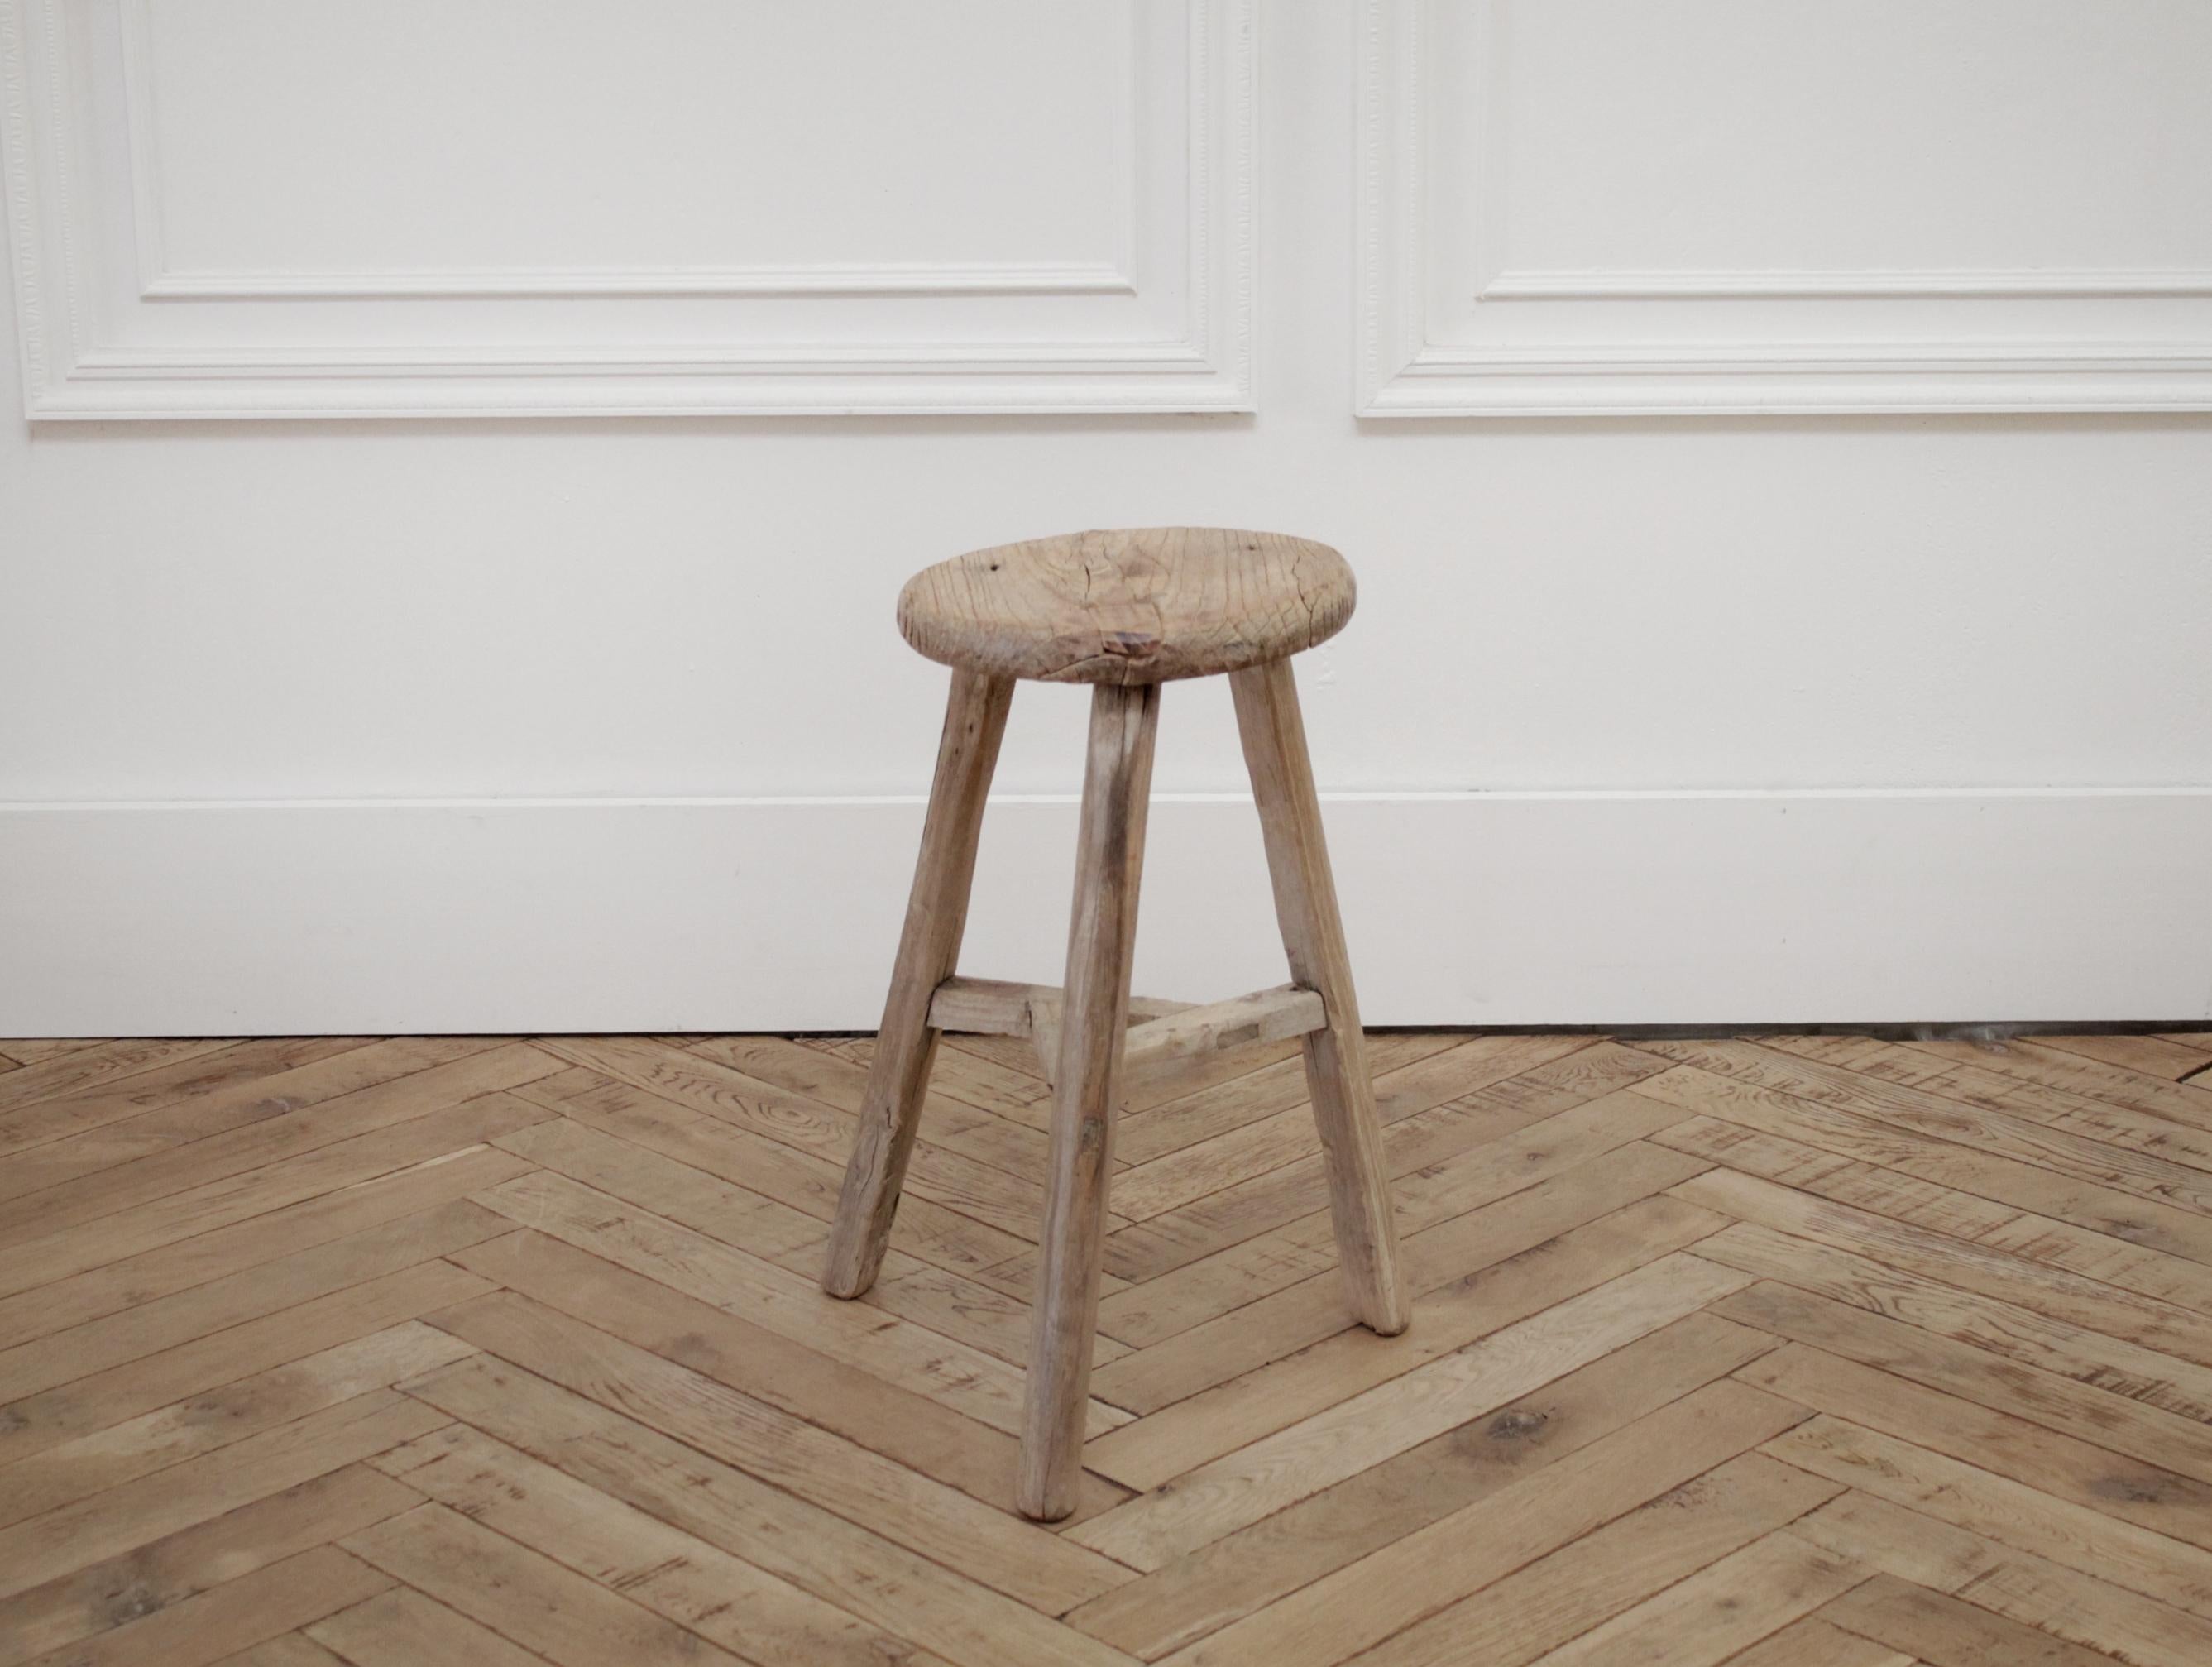 Vintage round elm wood stool.
Measures: 15